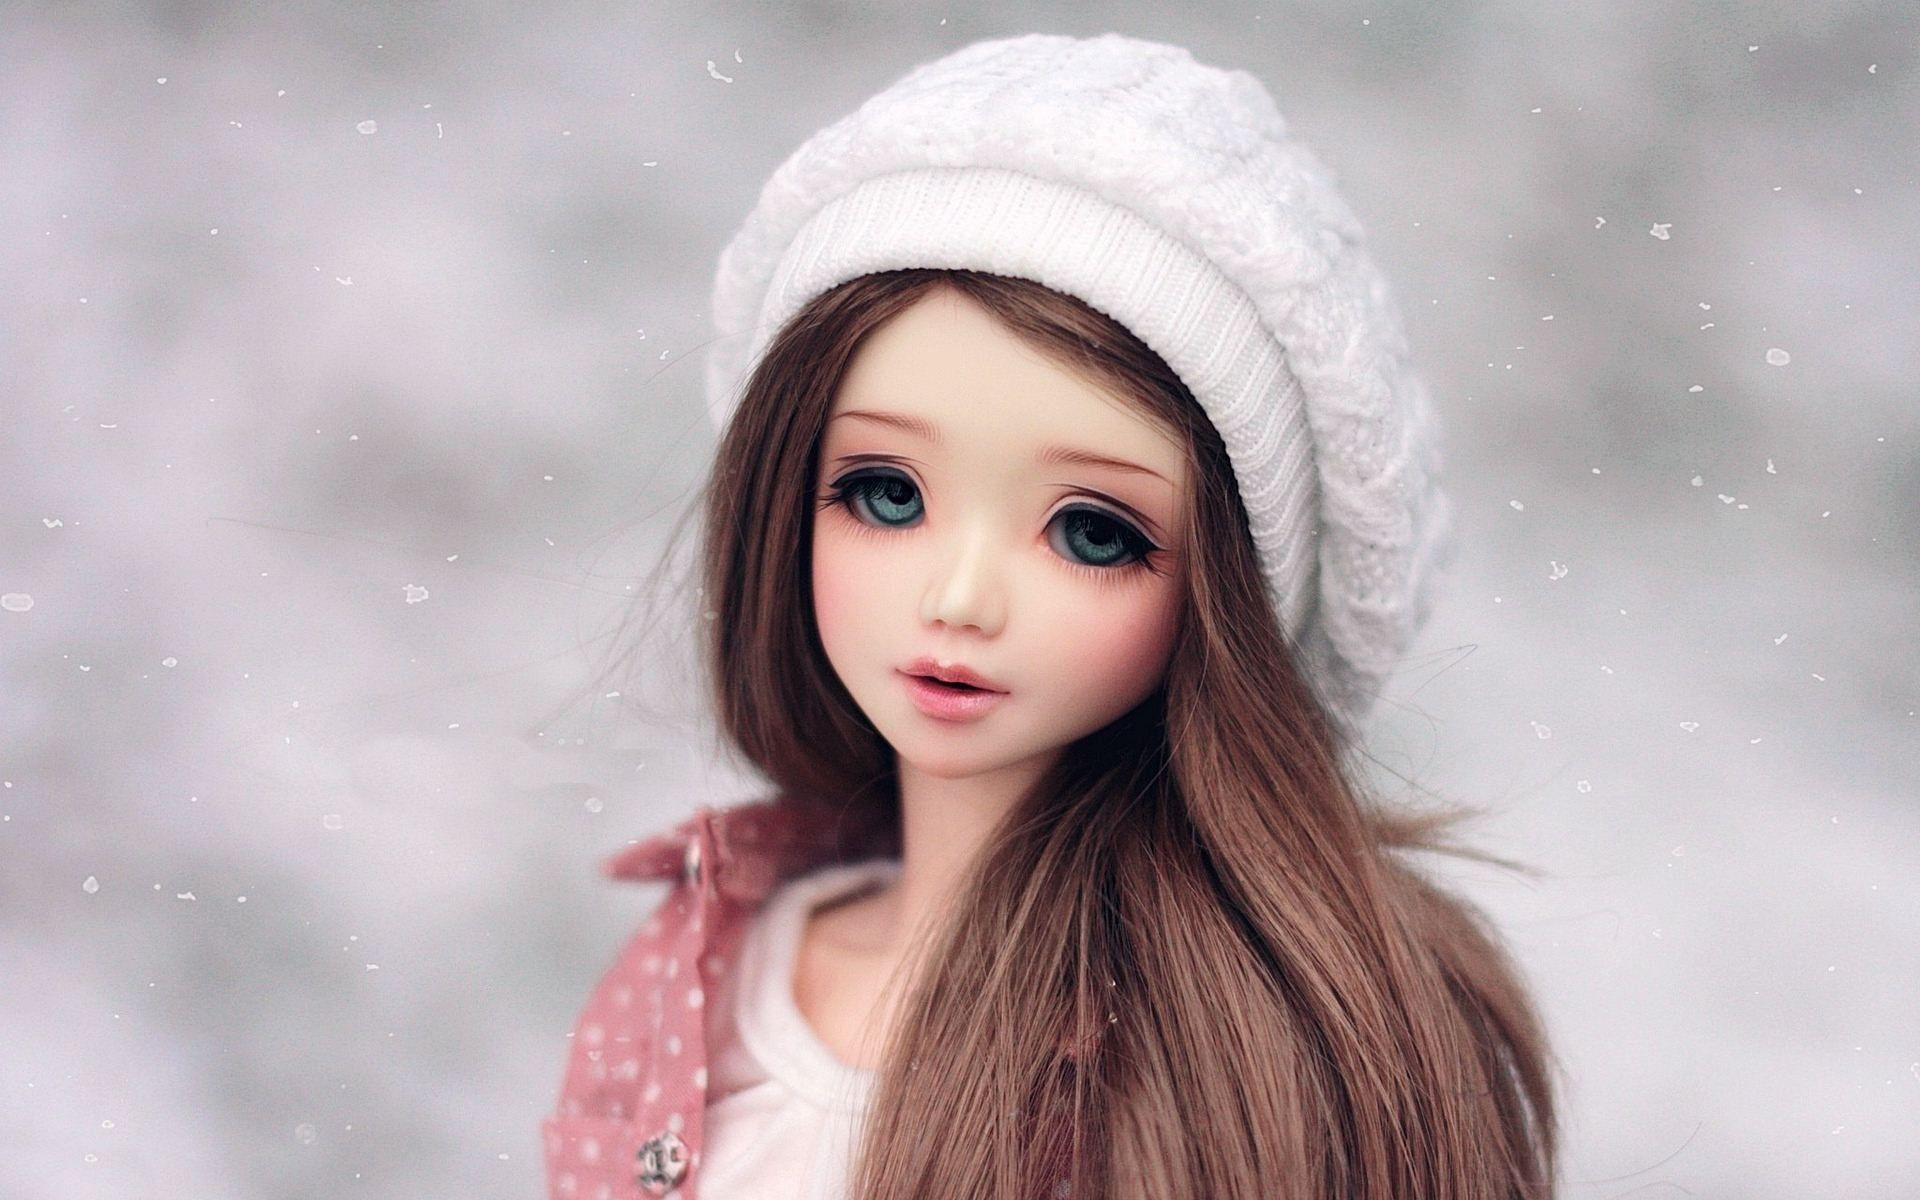 Best Beautiful Cute Barbie Doll HD Wallpaper Image